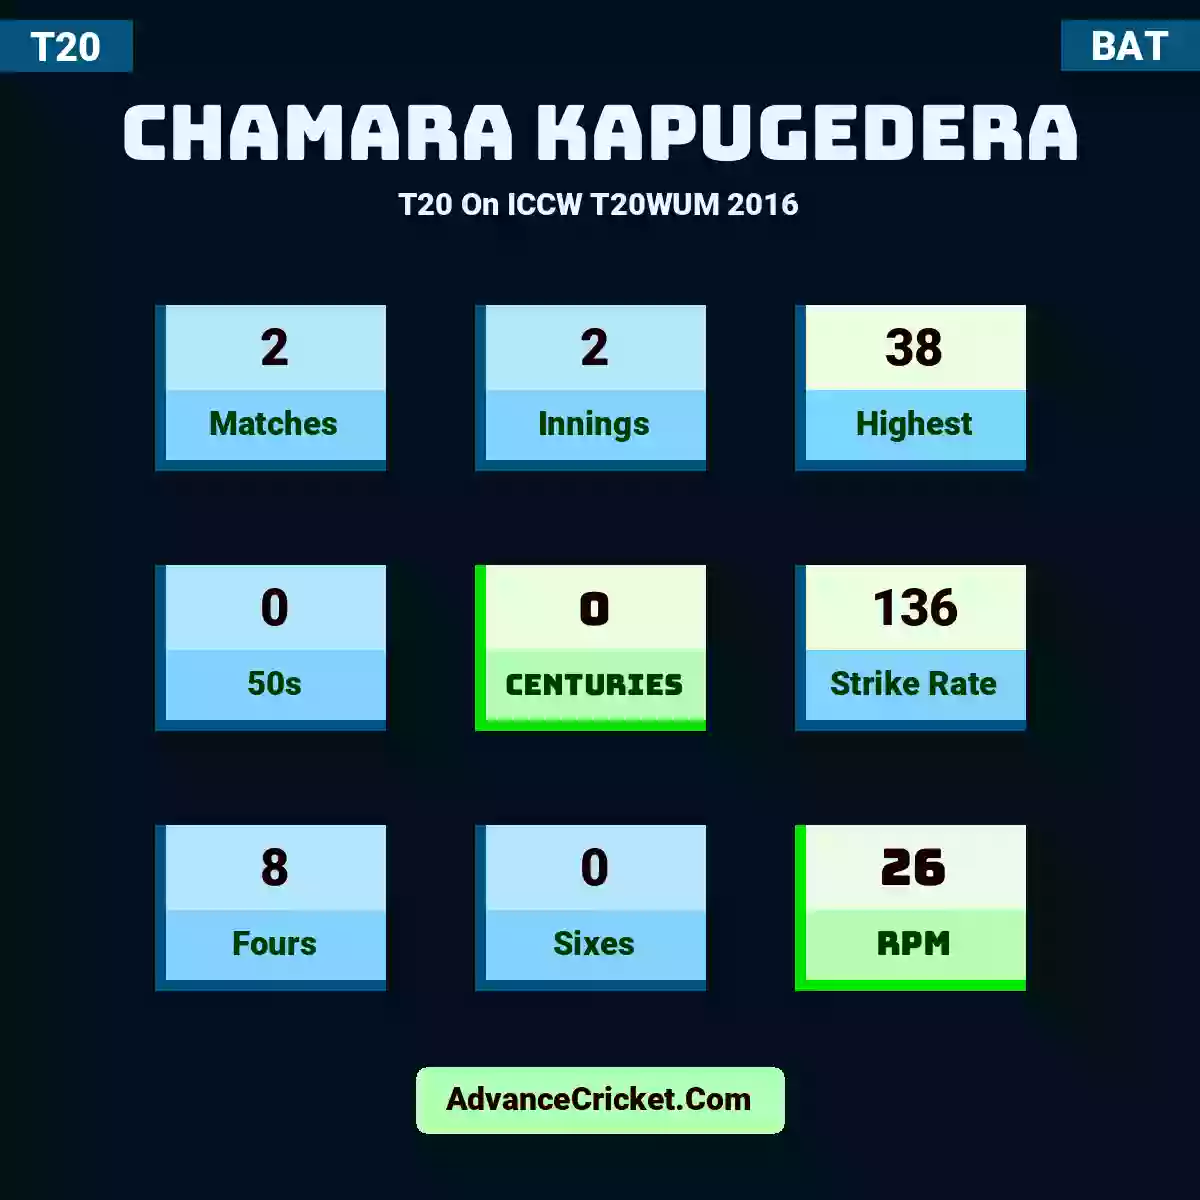 Chamara Kapugedera T20  On ICCW T20WUM 2016, Chamara Kapugedera played 2 matches, scored 38 runs as highest, 0 half-centuries, and 0 centuries, with a strike rate of 136. C.Kapugedera hit 8 fours and 0 sixes, with an RPM of 26.